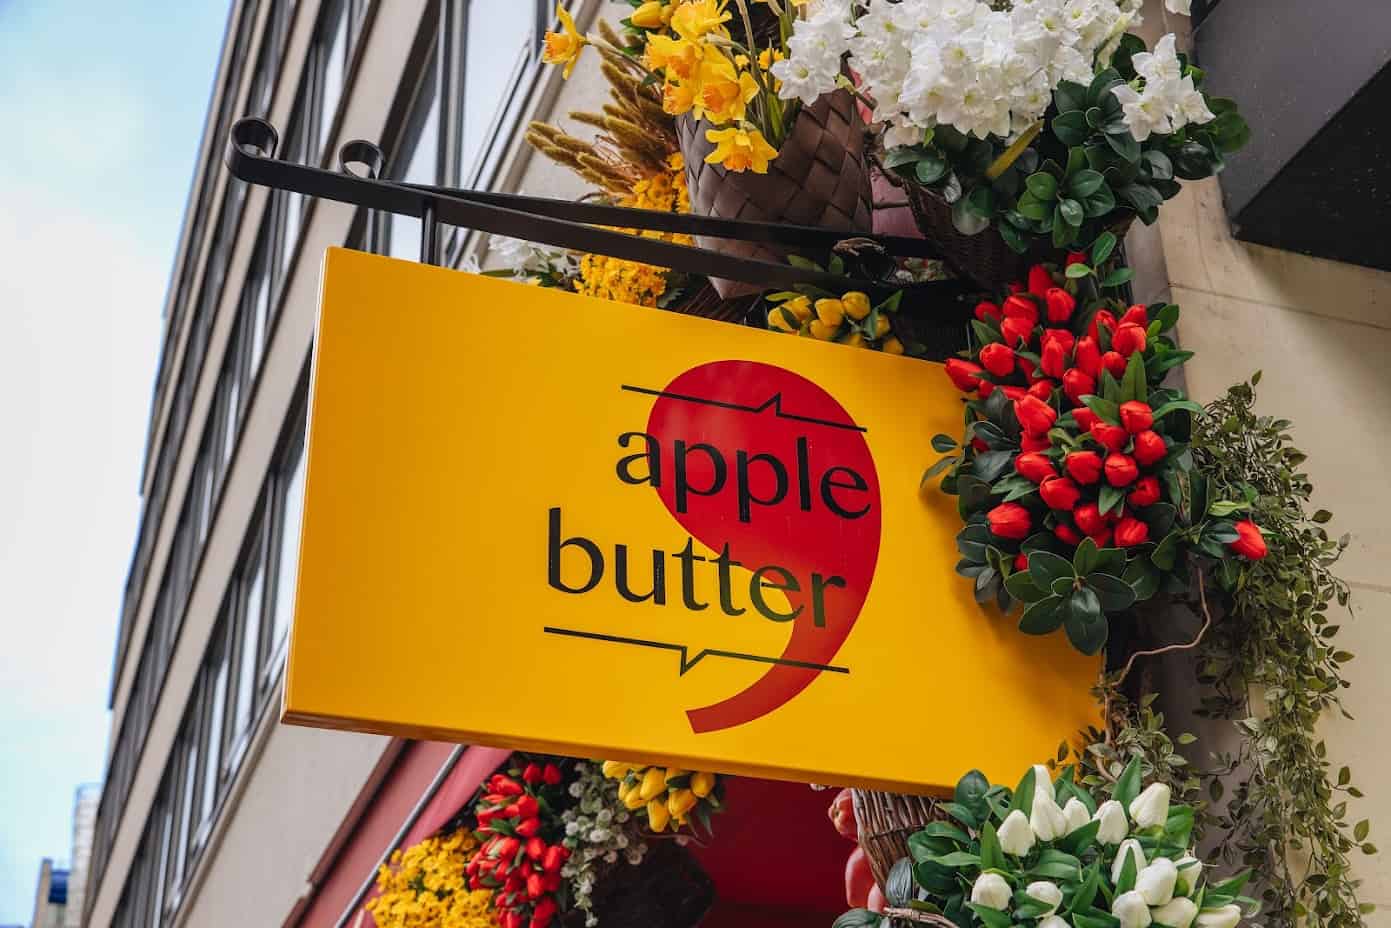 Apple Butter, super popular Middle Eastern brunch spot, opens new branch on Langham Place